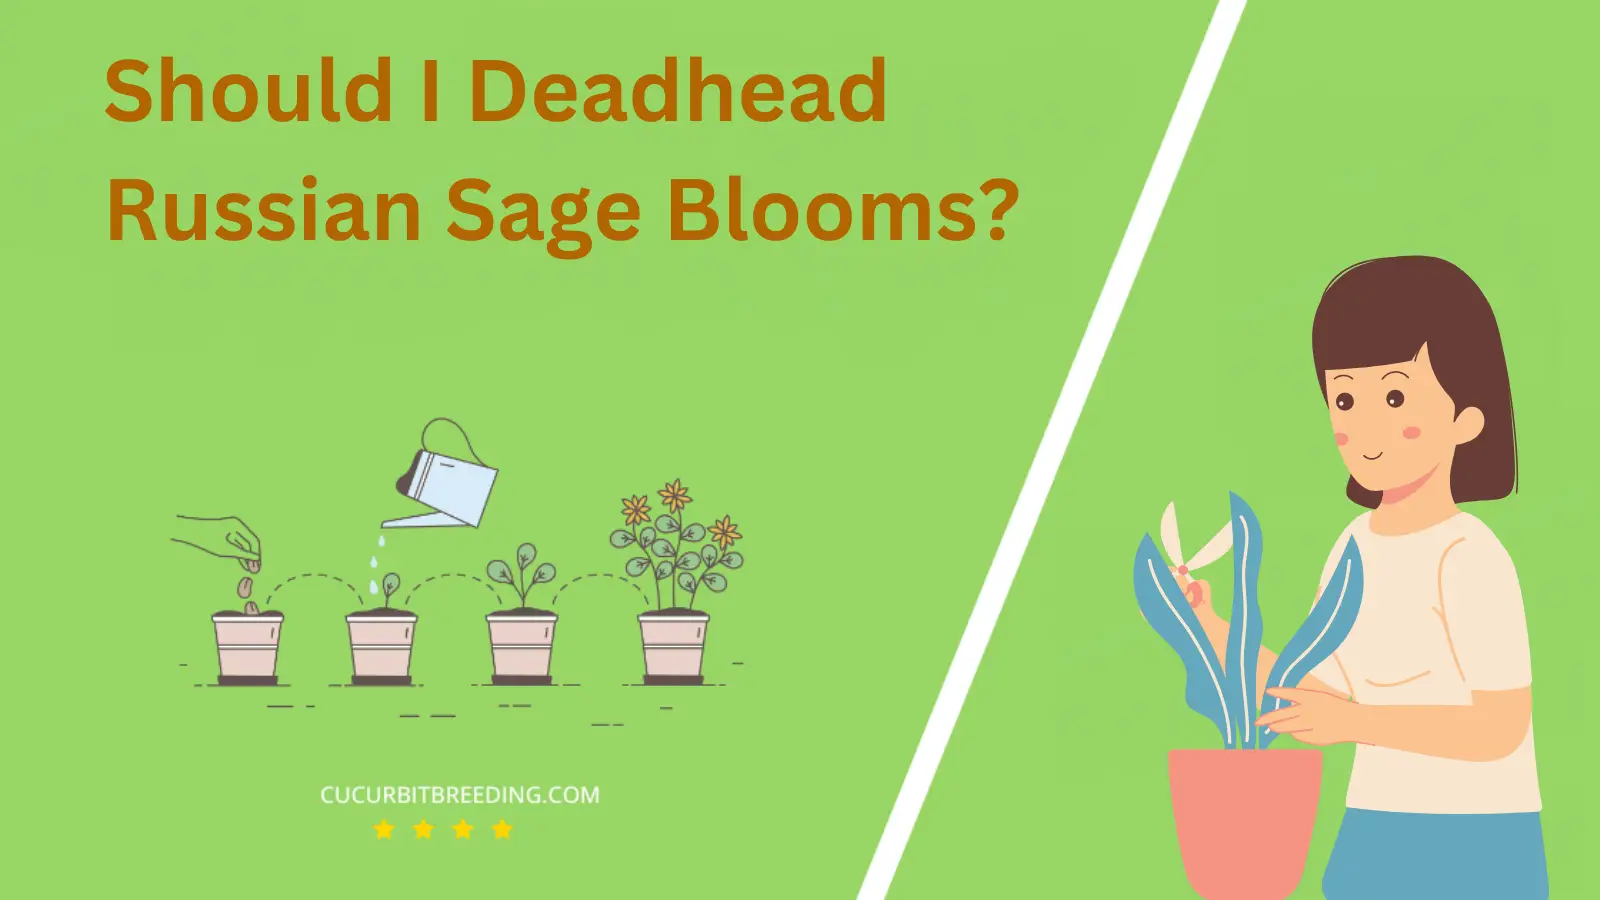 Should I Deadhead Russian Sage Blooms?